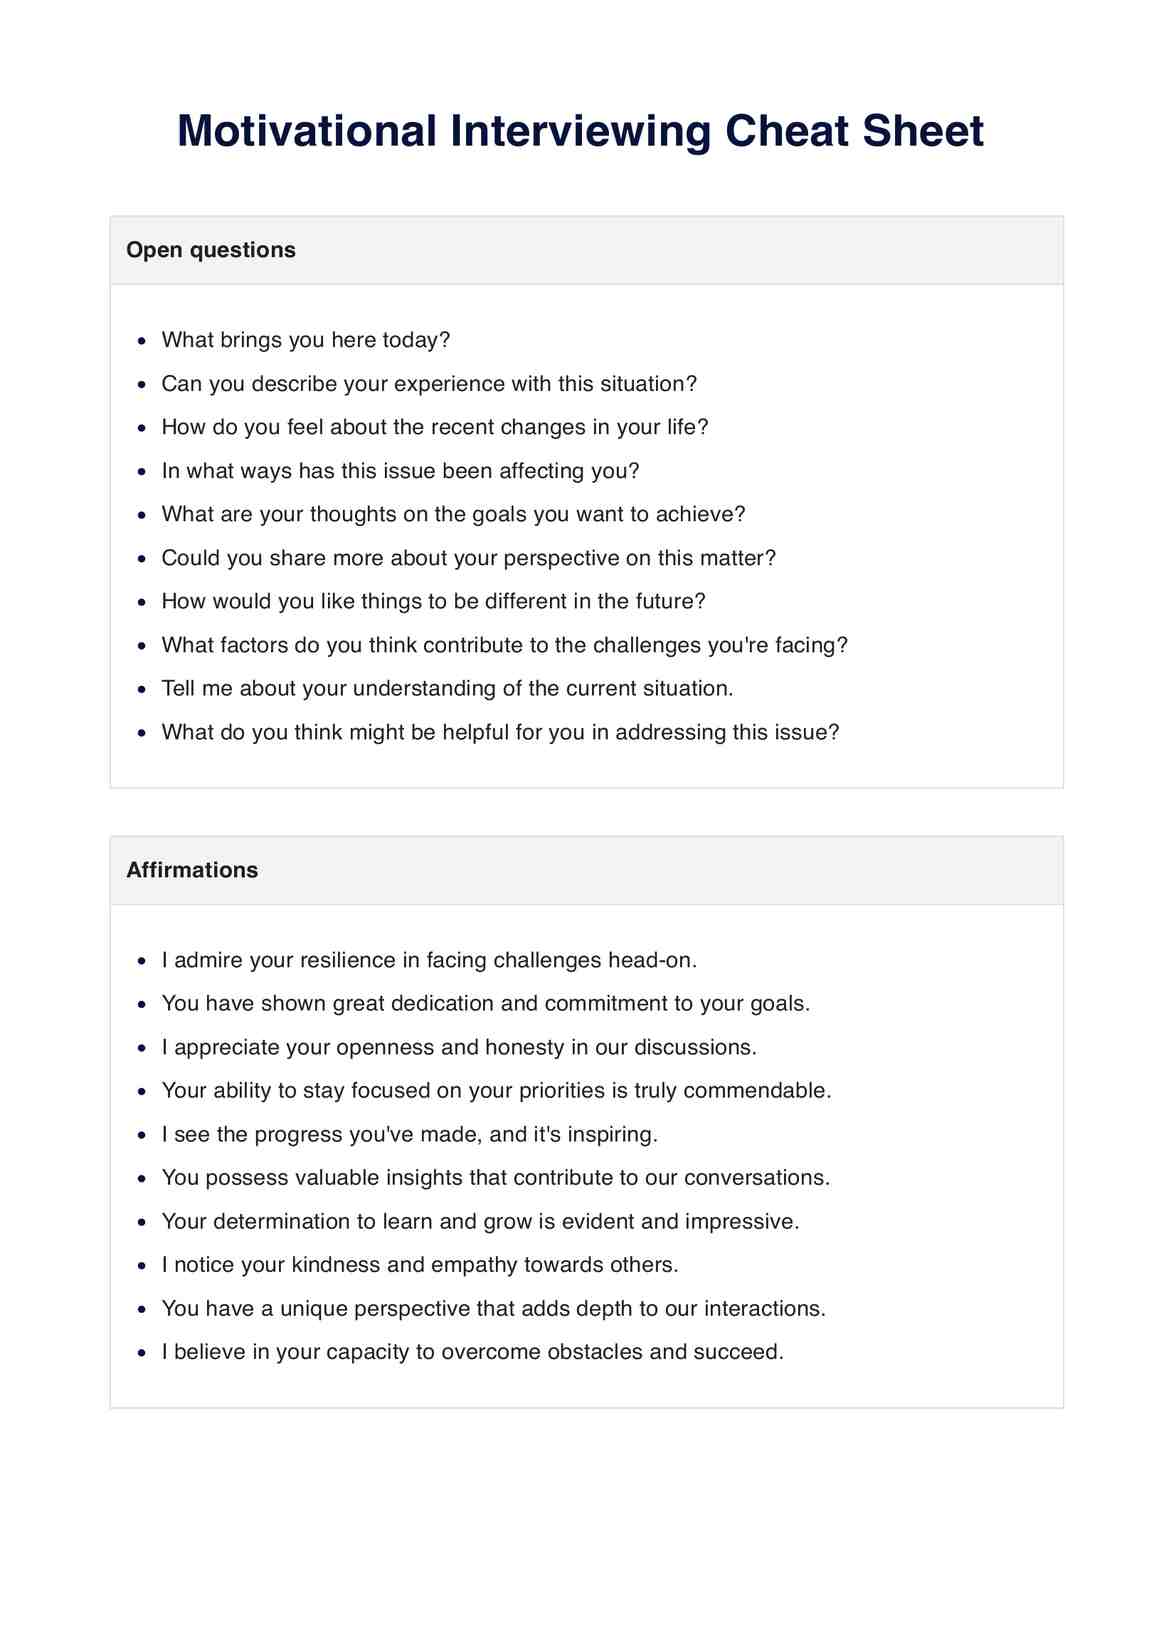 Motivational Interviewing Cheat Sheet PDF Example